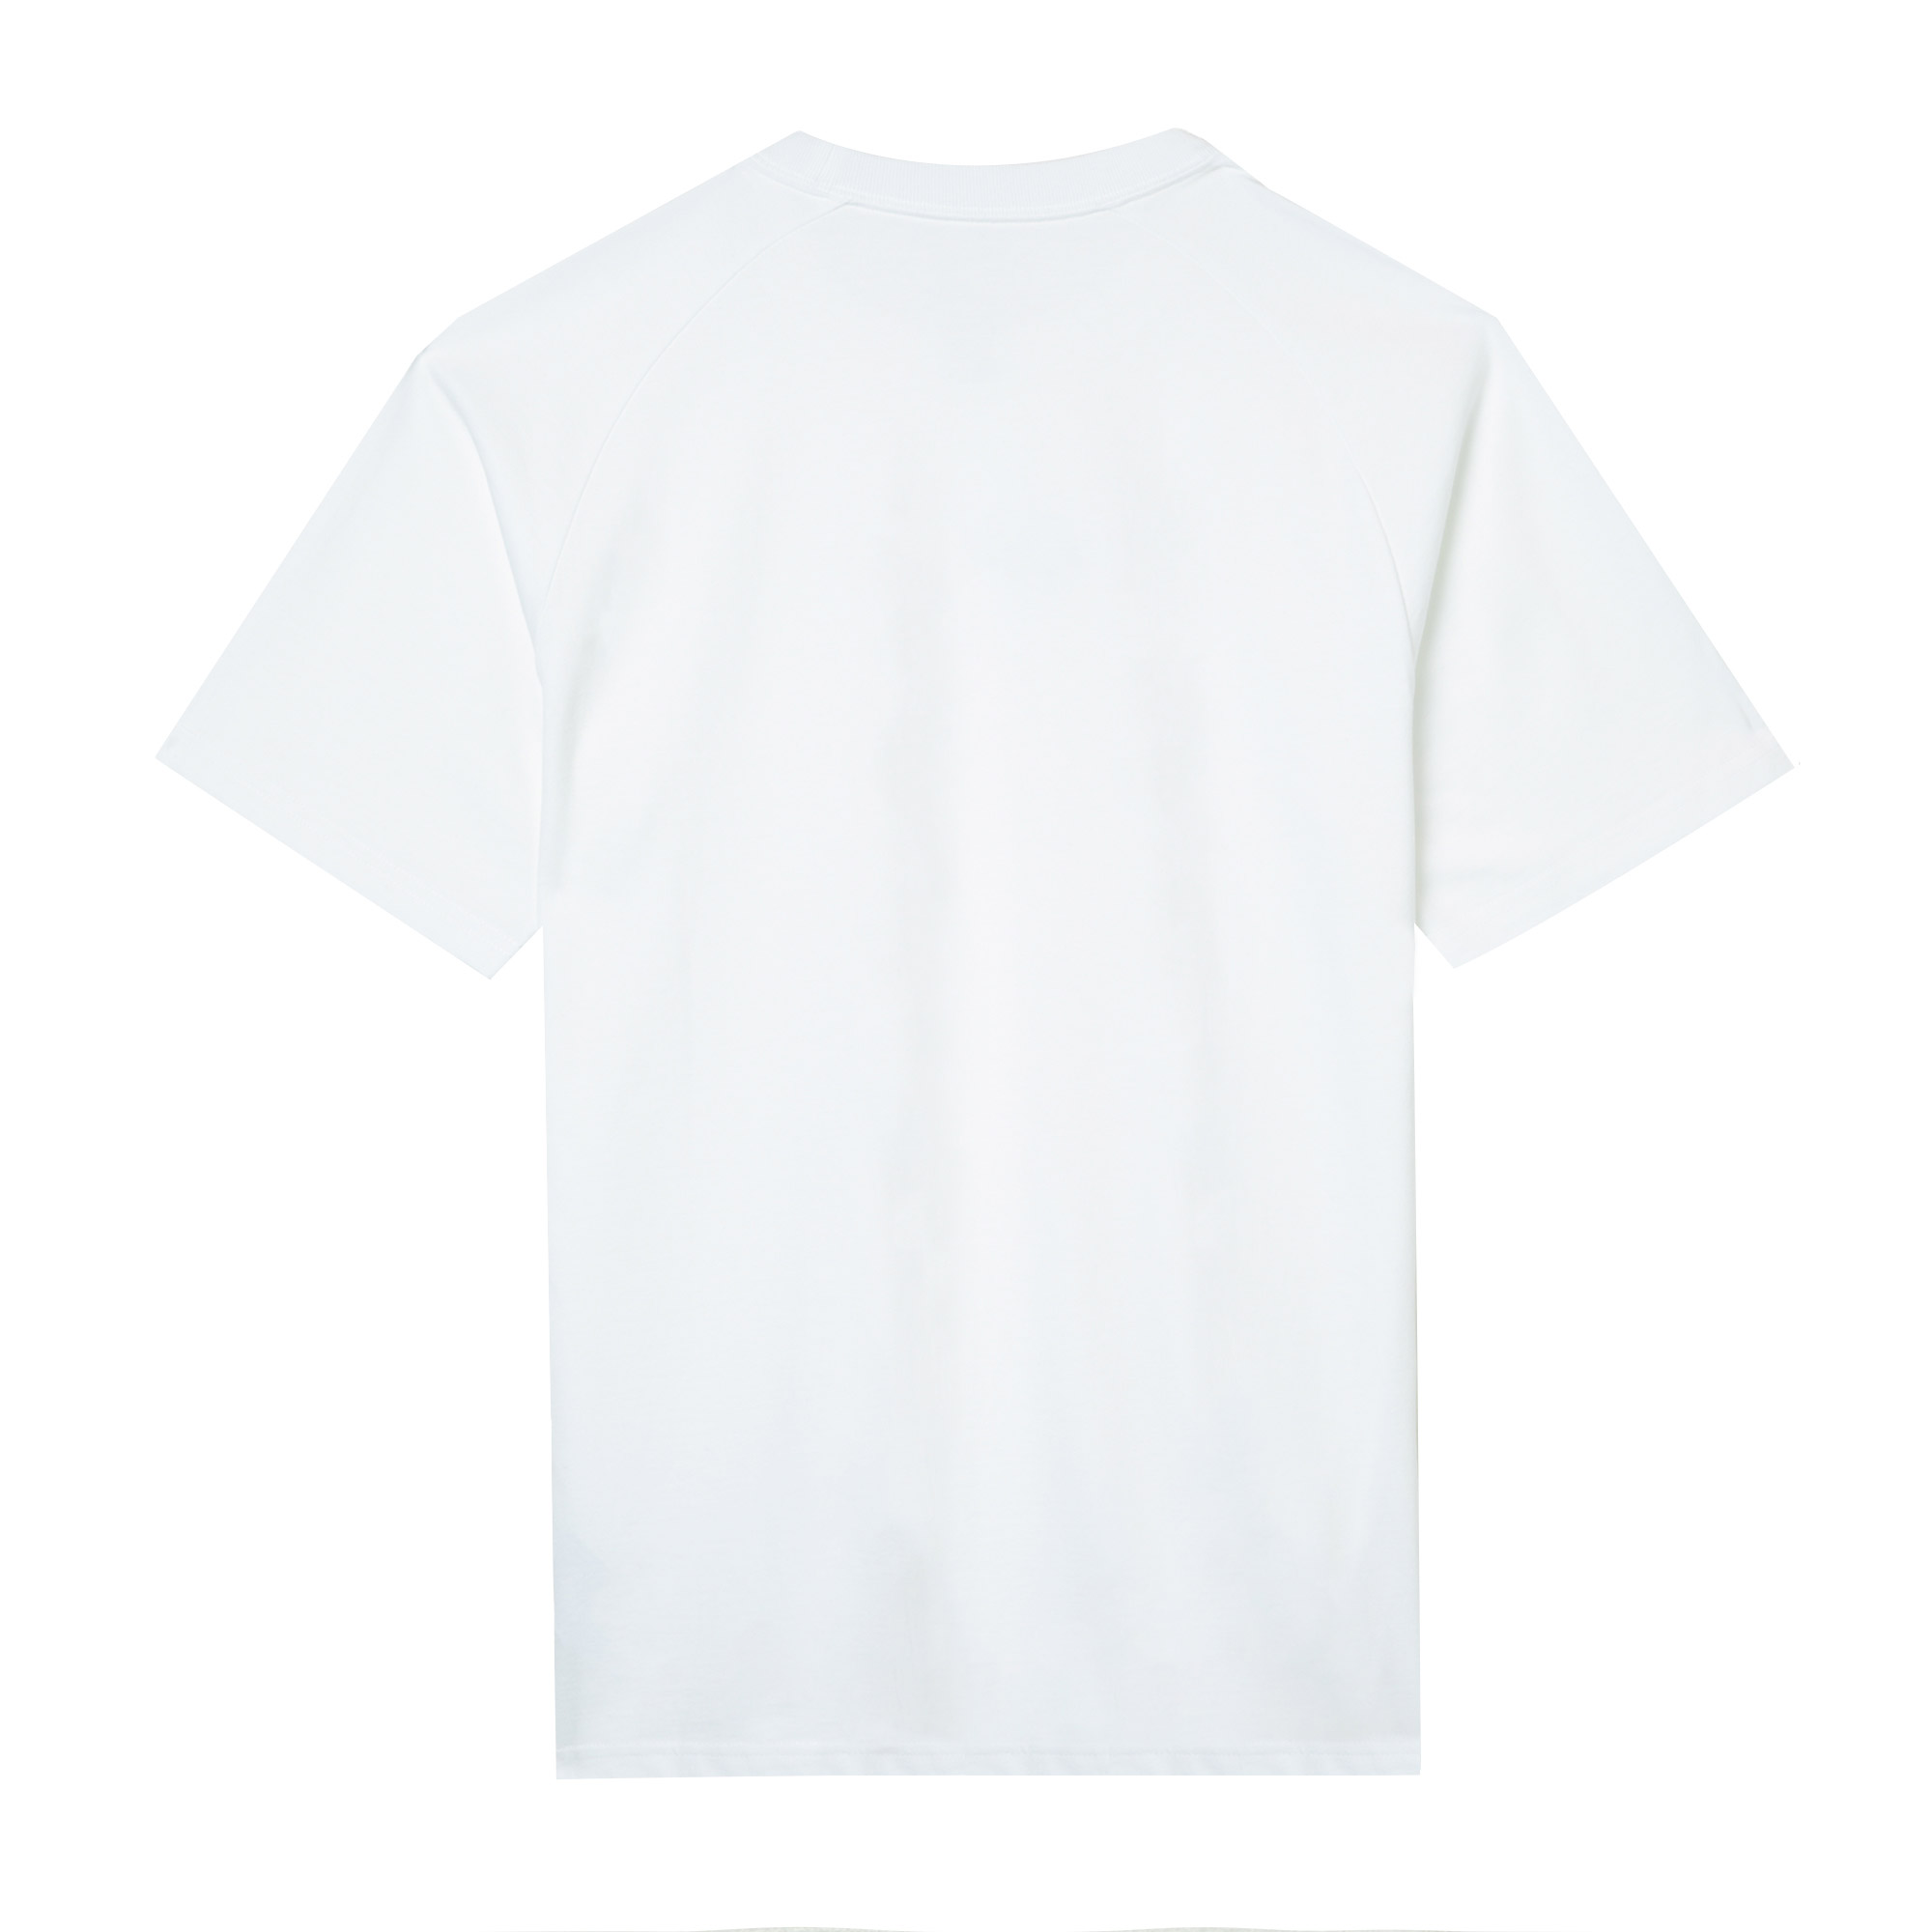  Converse Court Lifestyle Erkek Beyaz T-Shirt